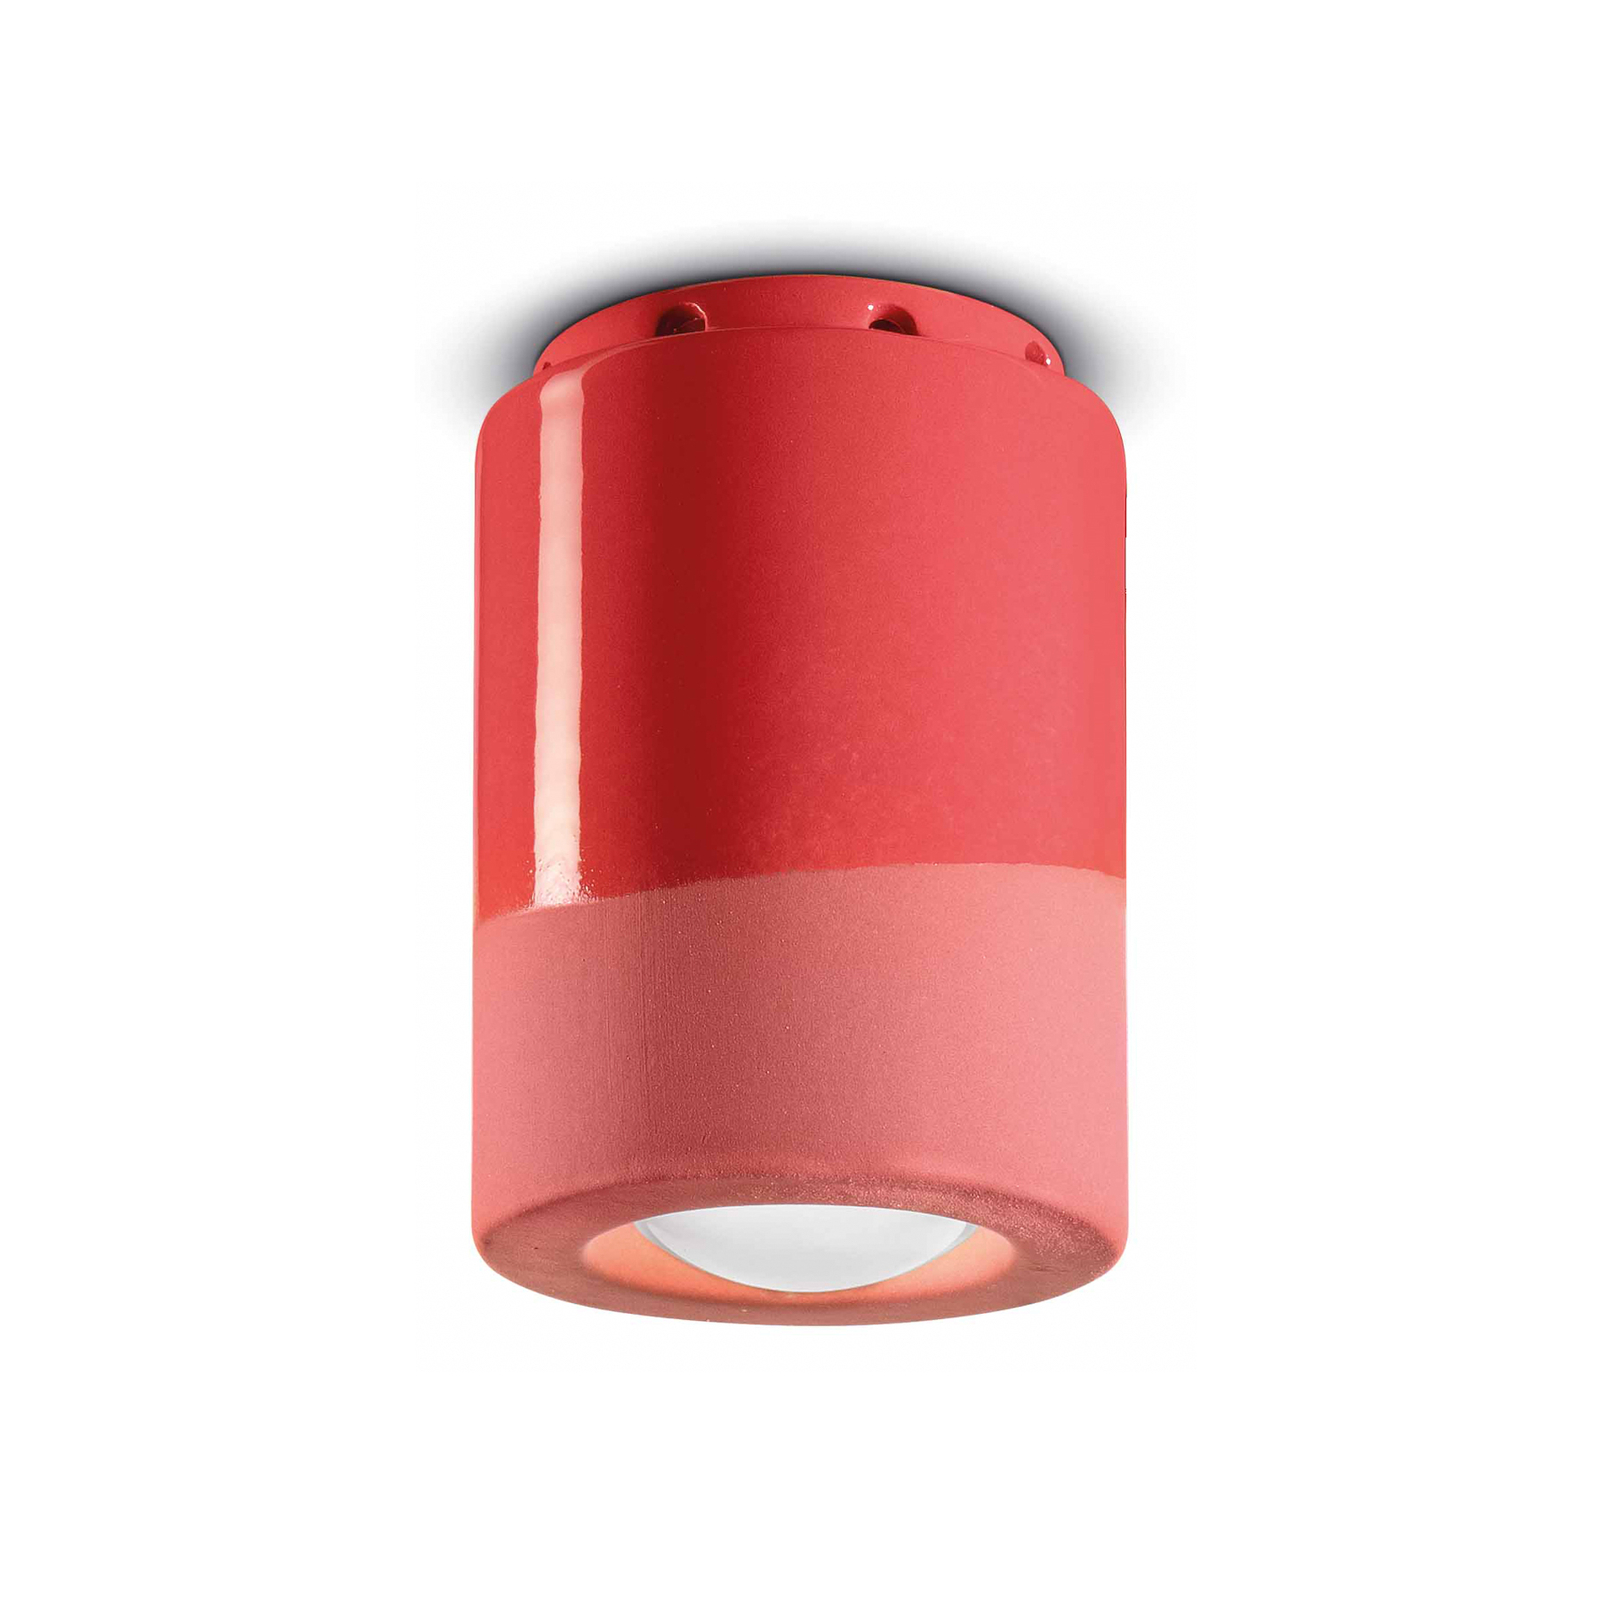 Plafoniera PI, cilindrica, Ø 8,5 cm, rosso